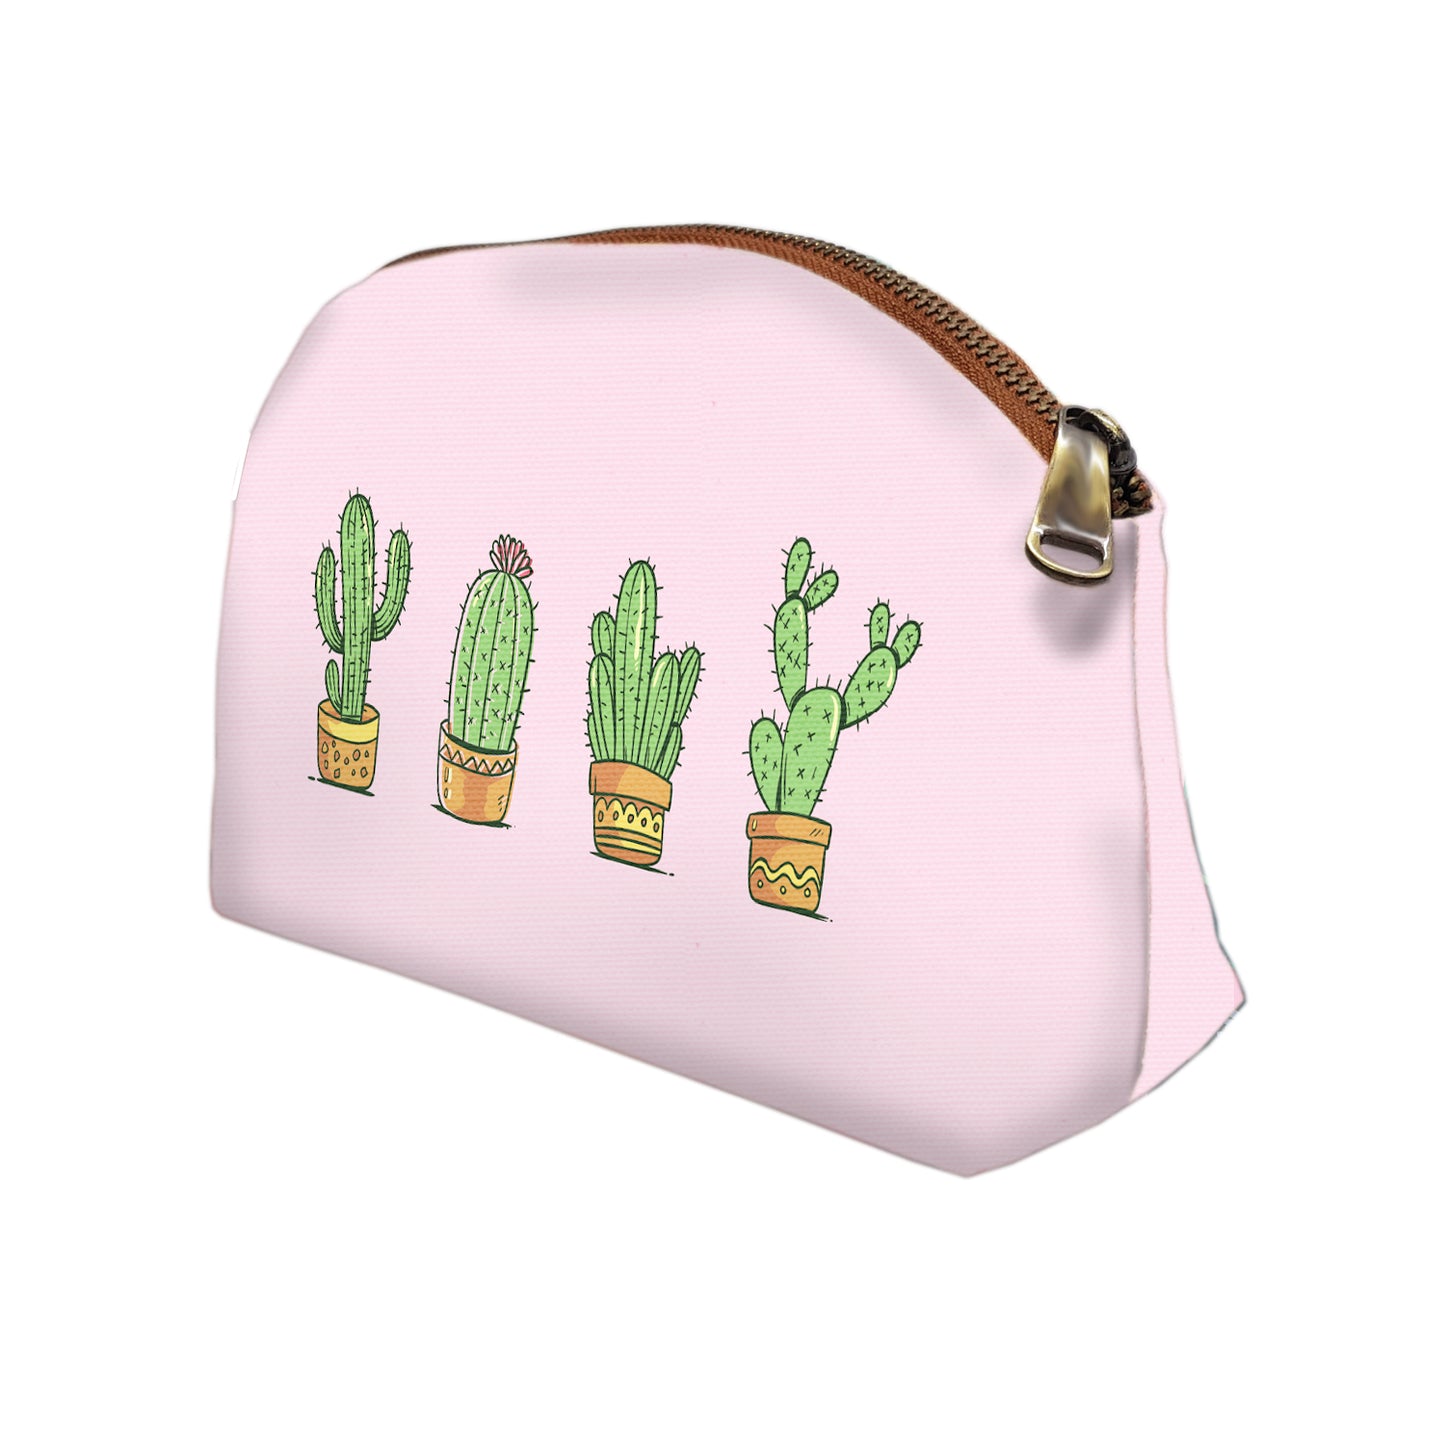 Cactus - Classic Pouch